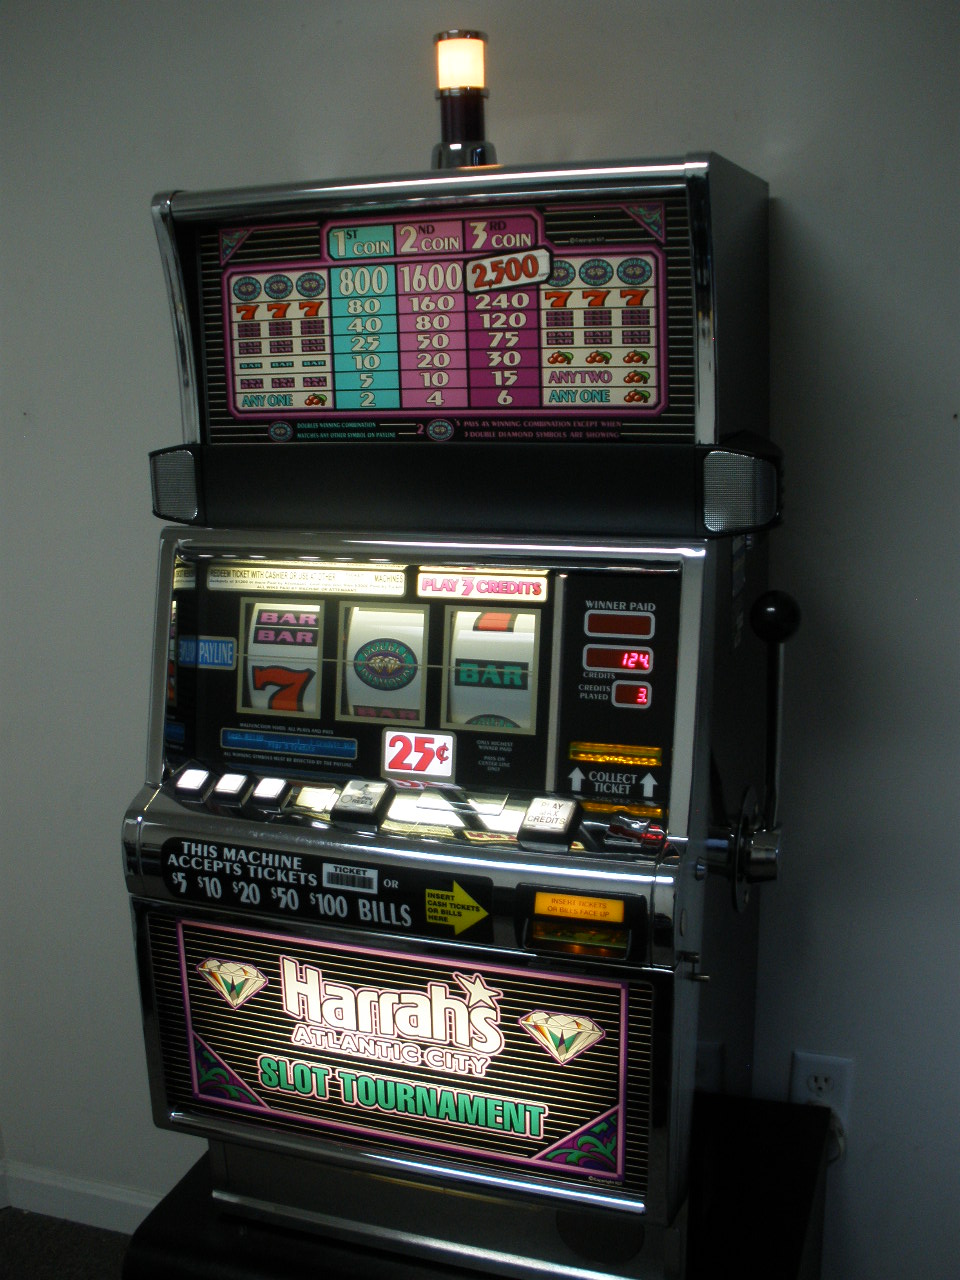 Slots Machines